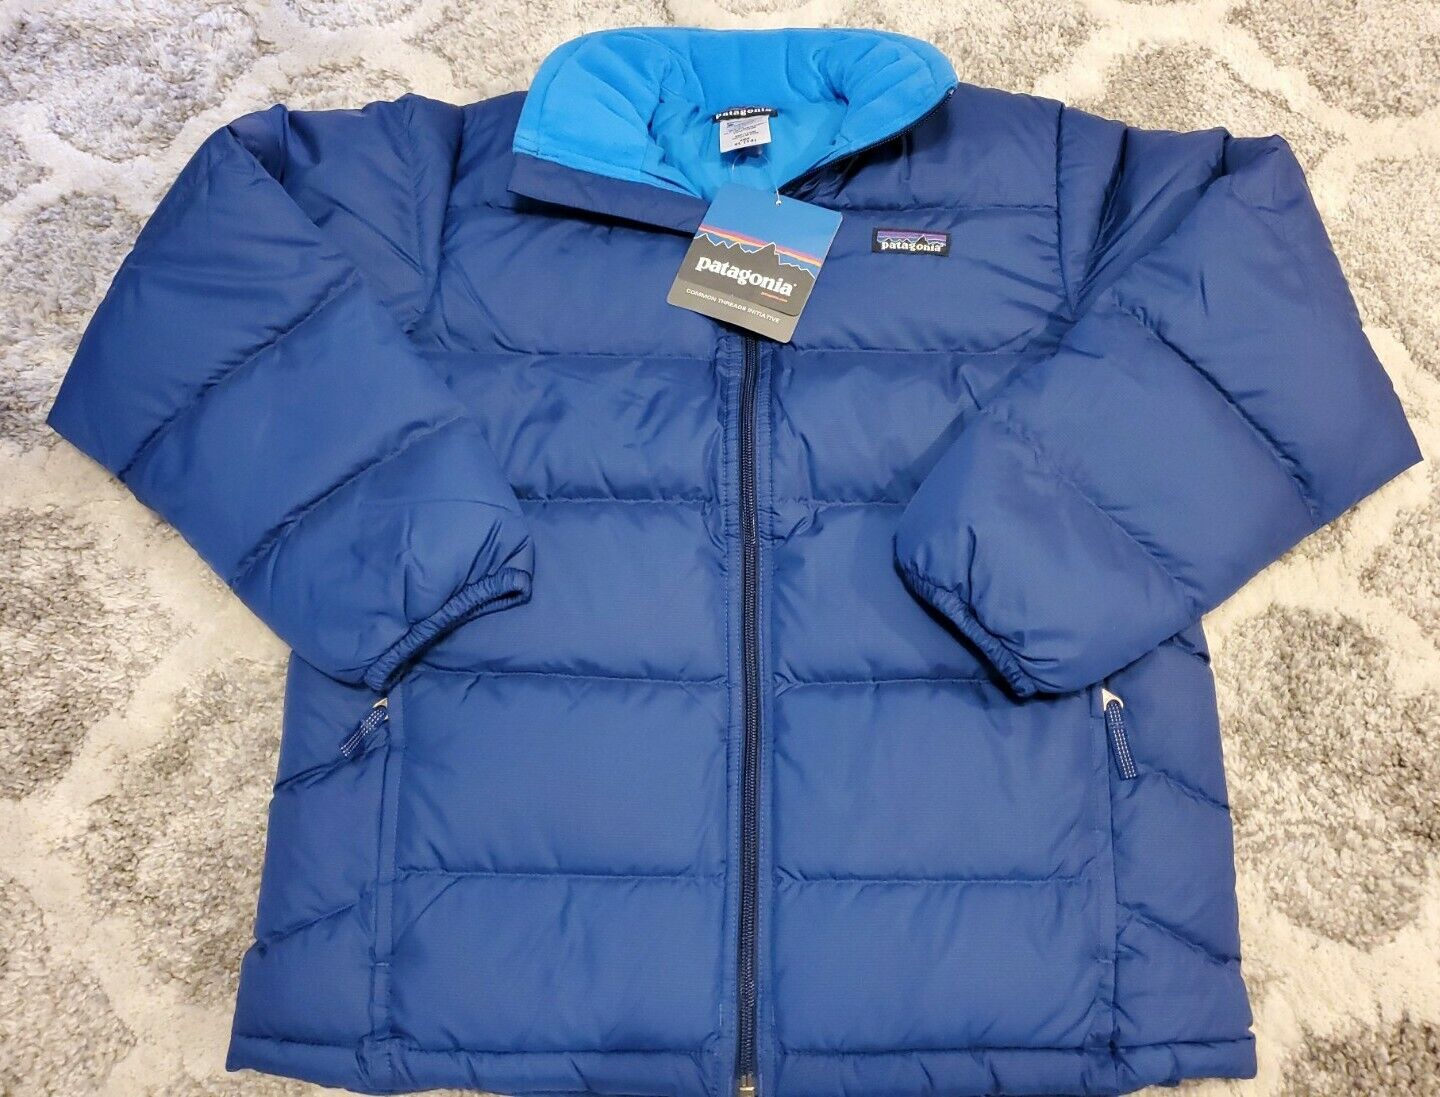 Patagonia Kids Goose Down Jacket, Sweater Navy Size XL (14) New ✅